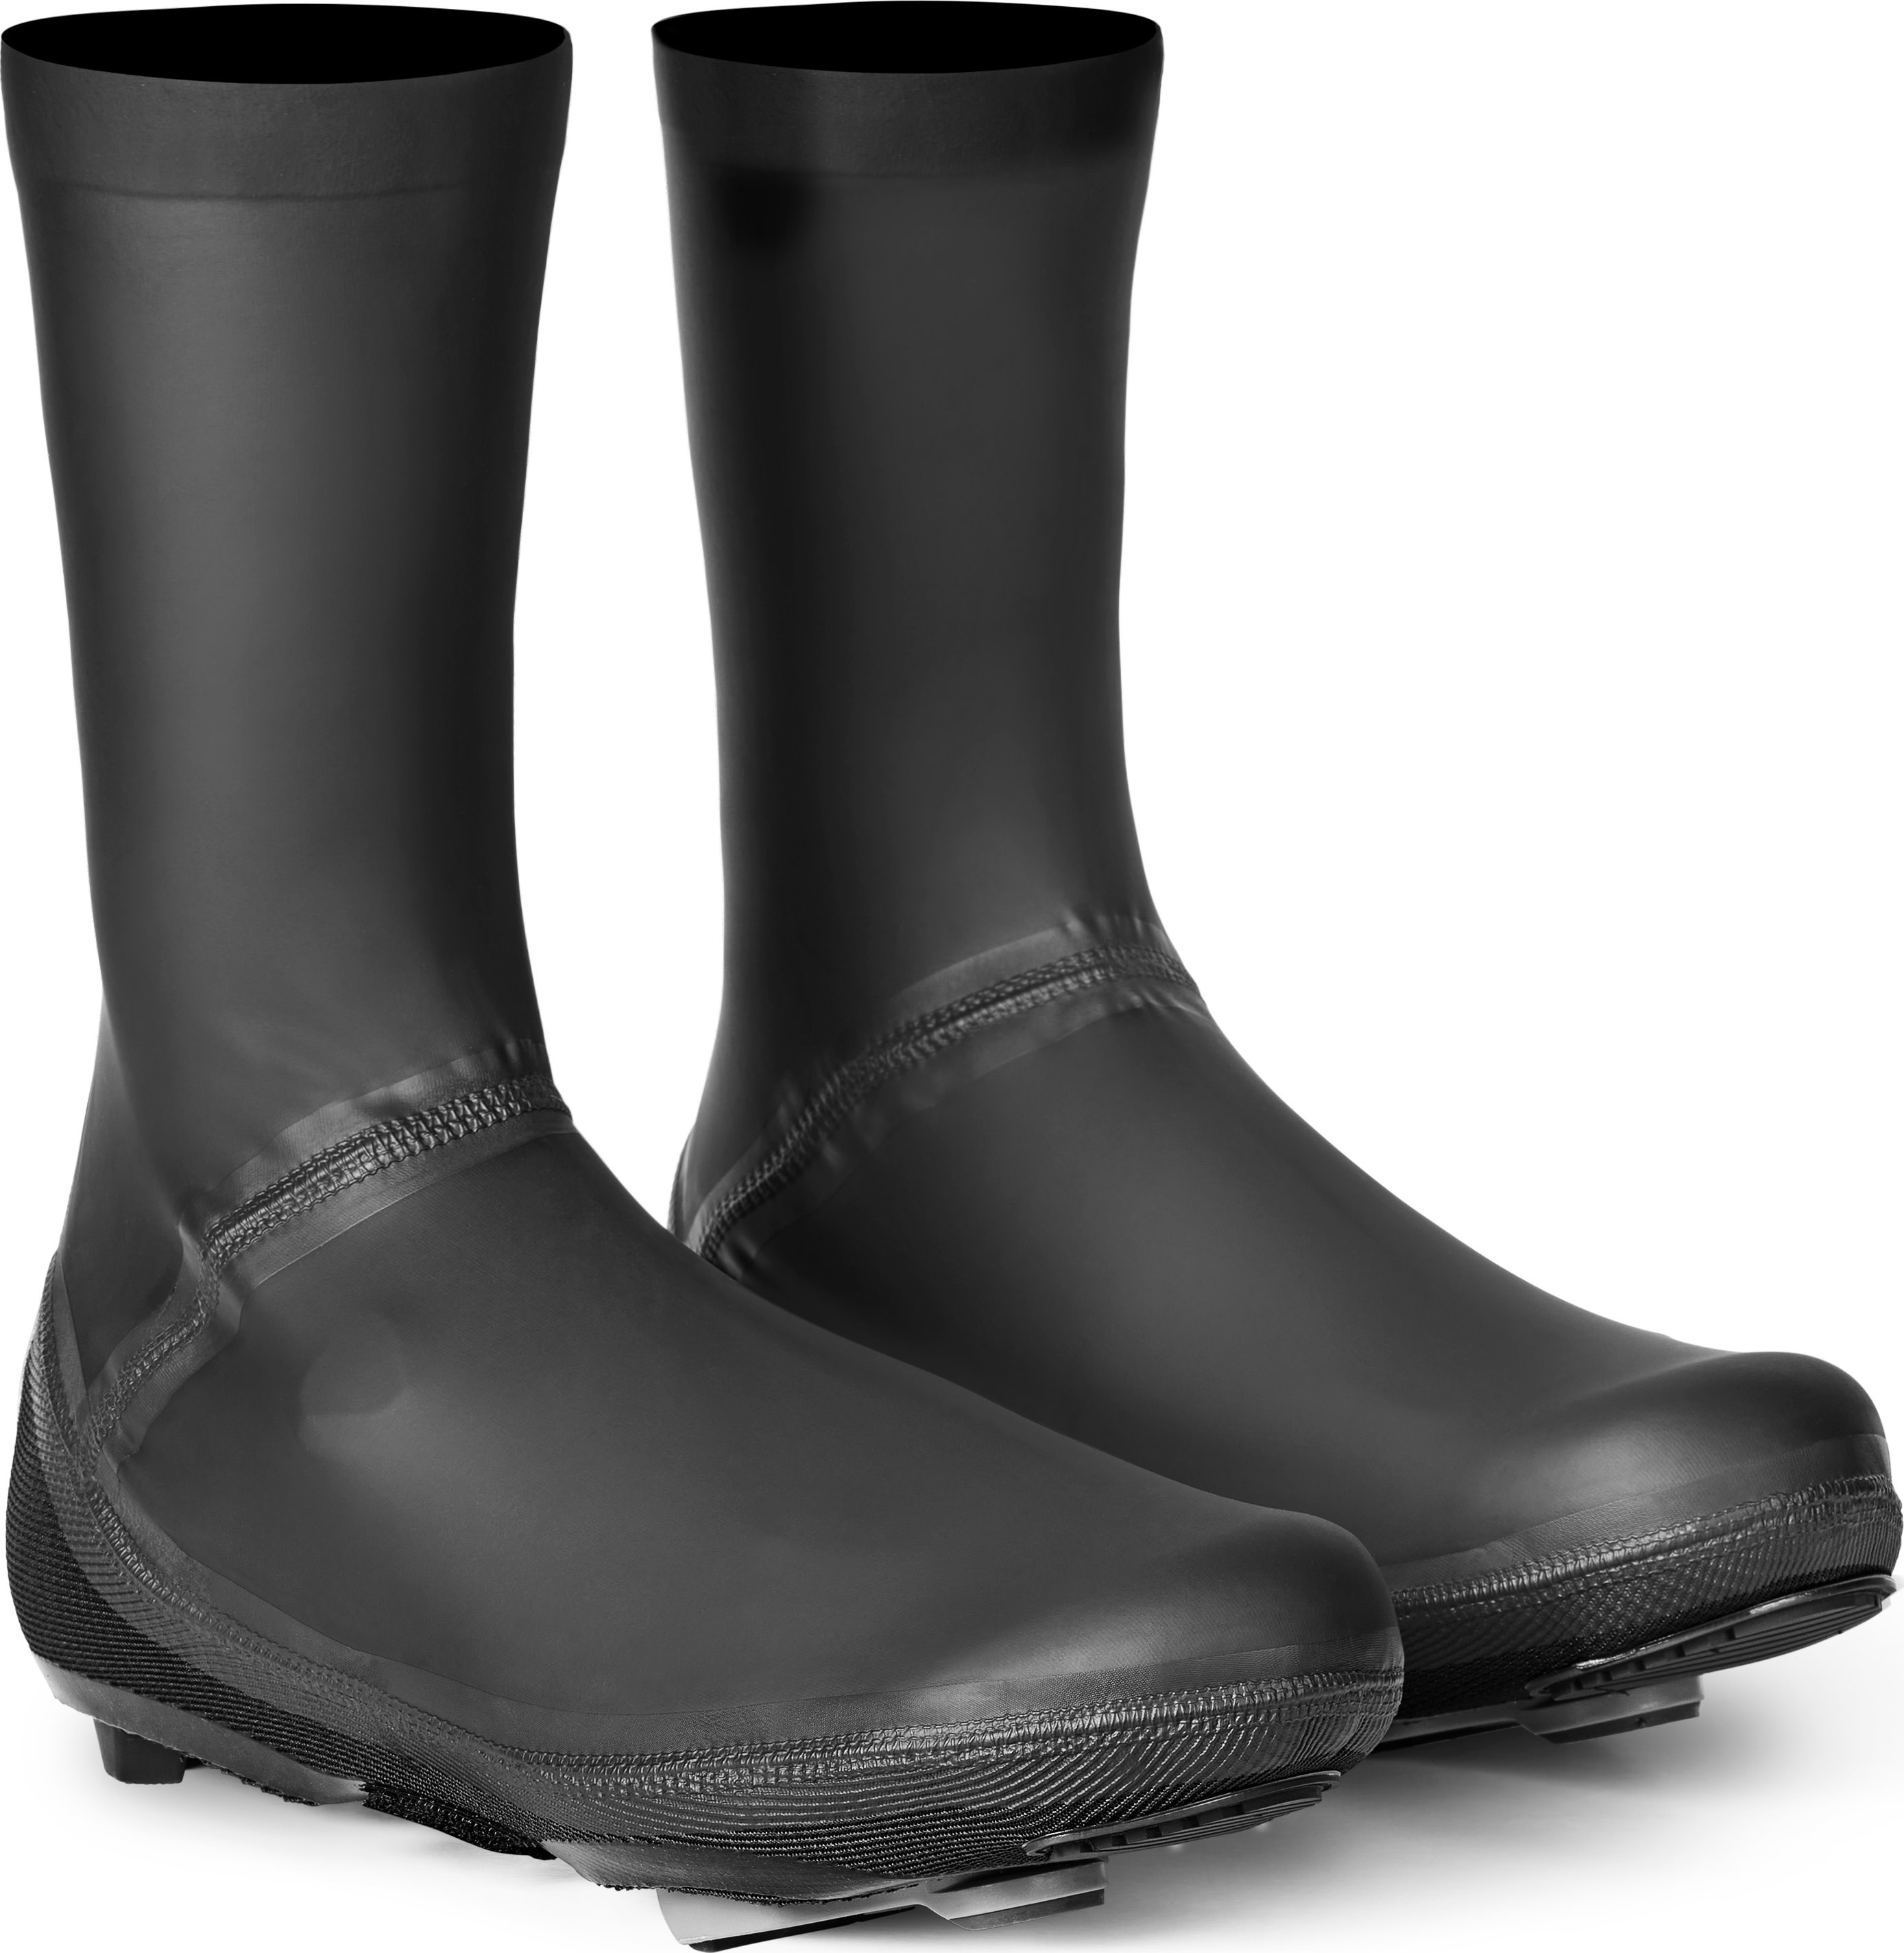 Gripgrab AquaShield 2 Waterproof Road Shoe Covers Black